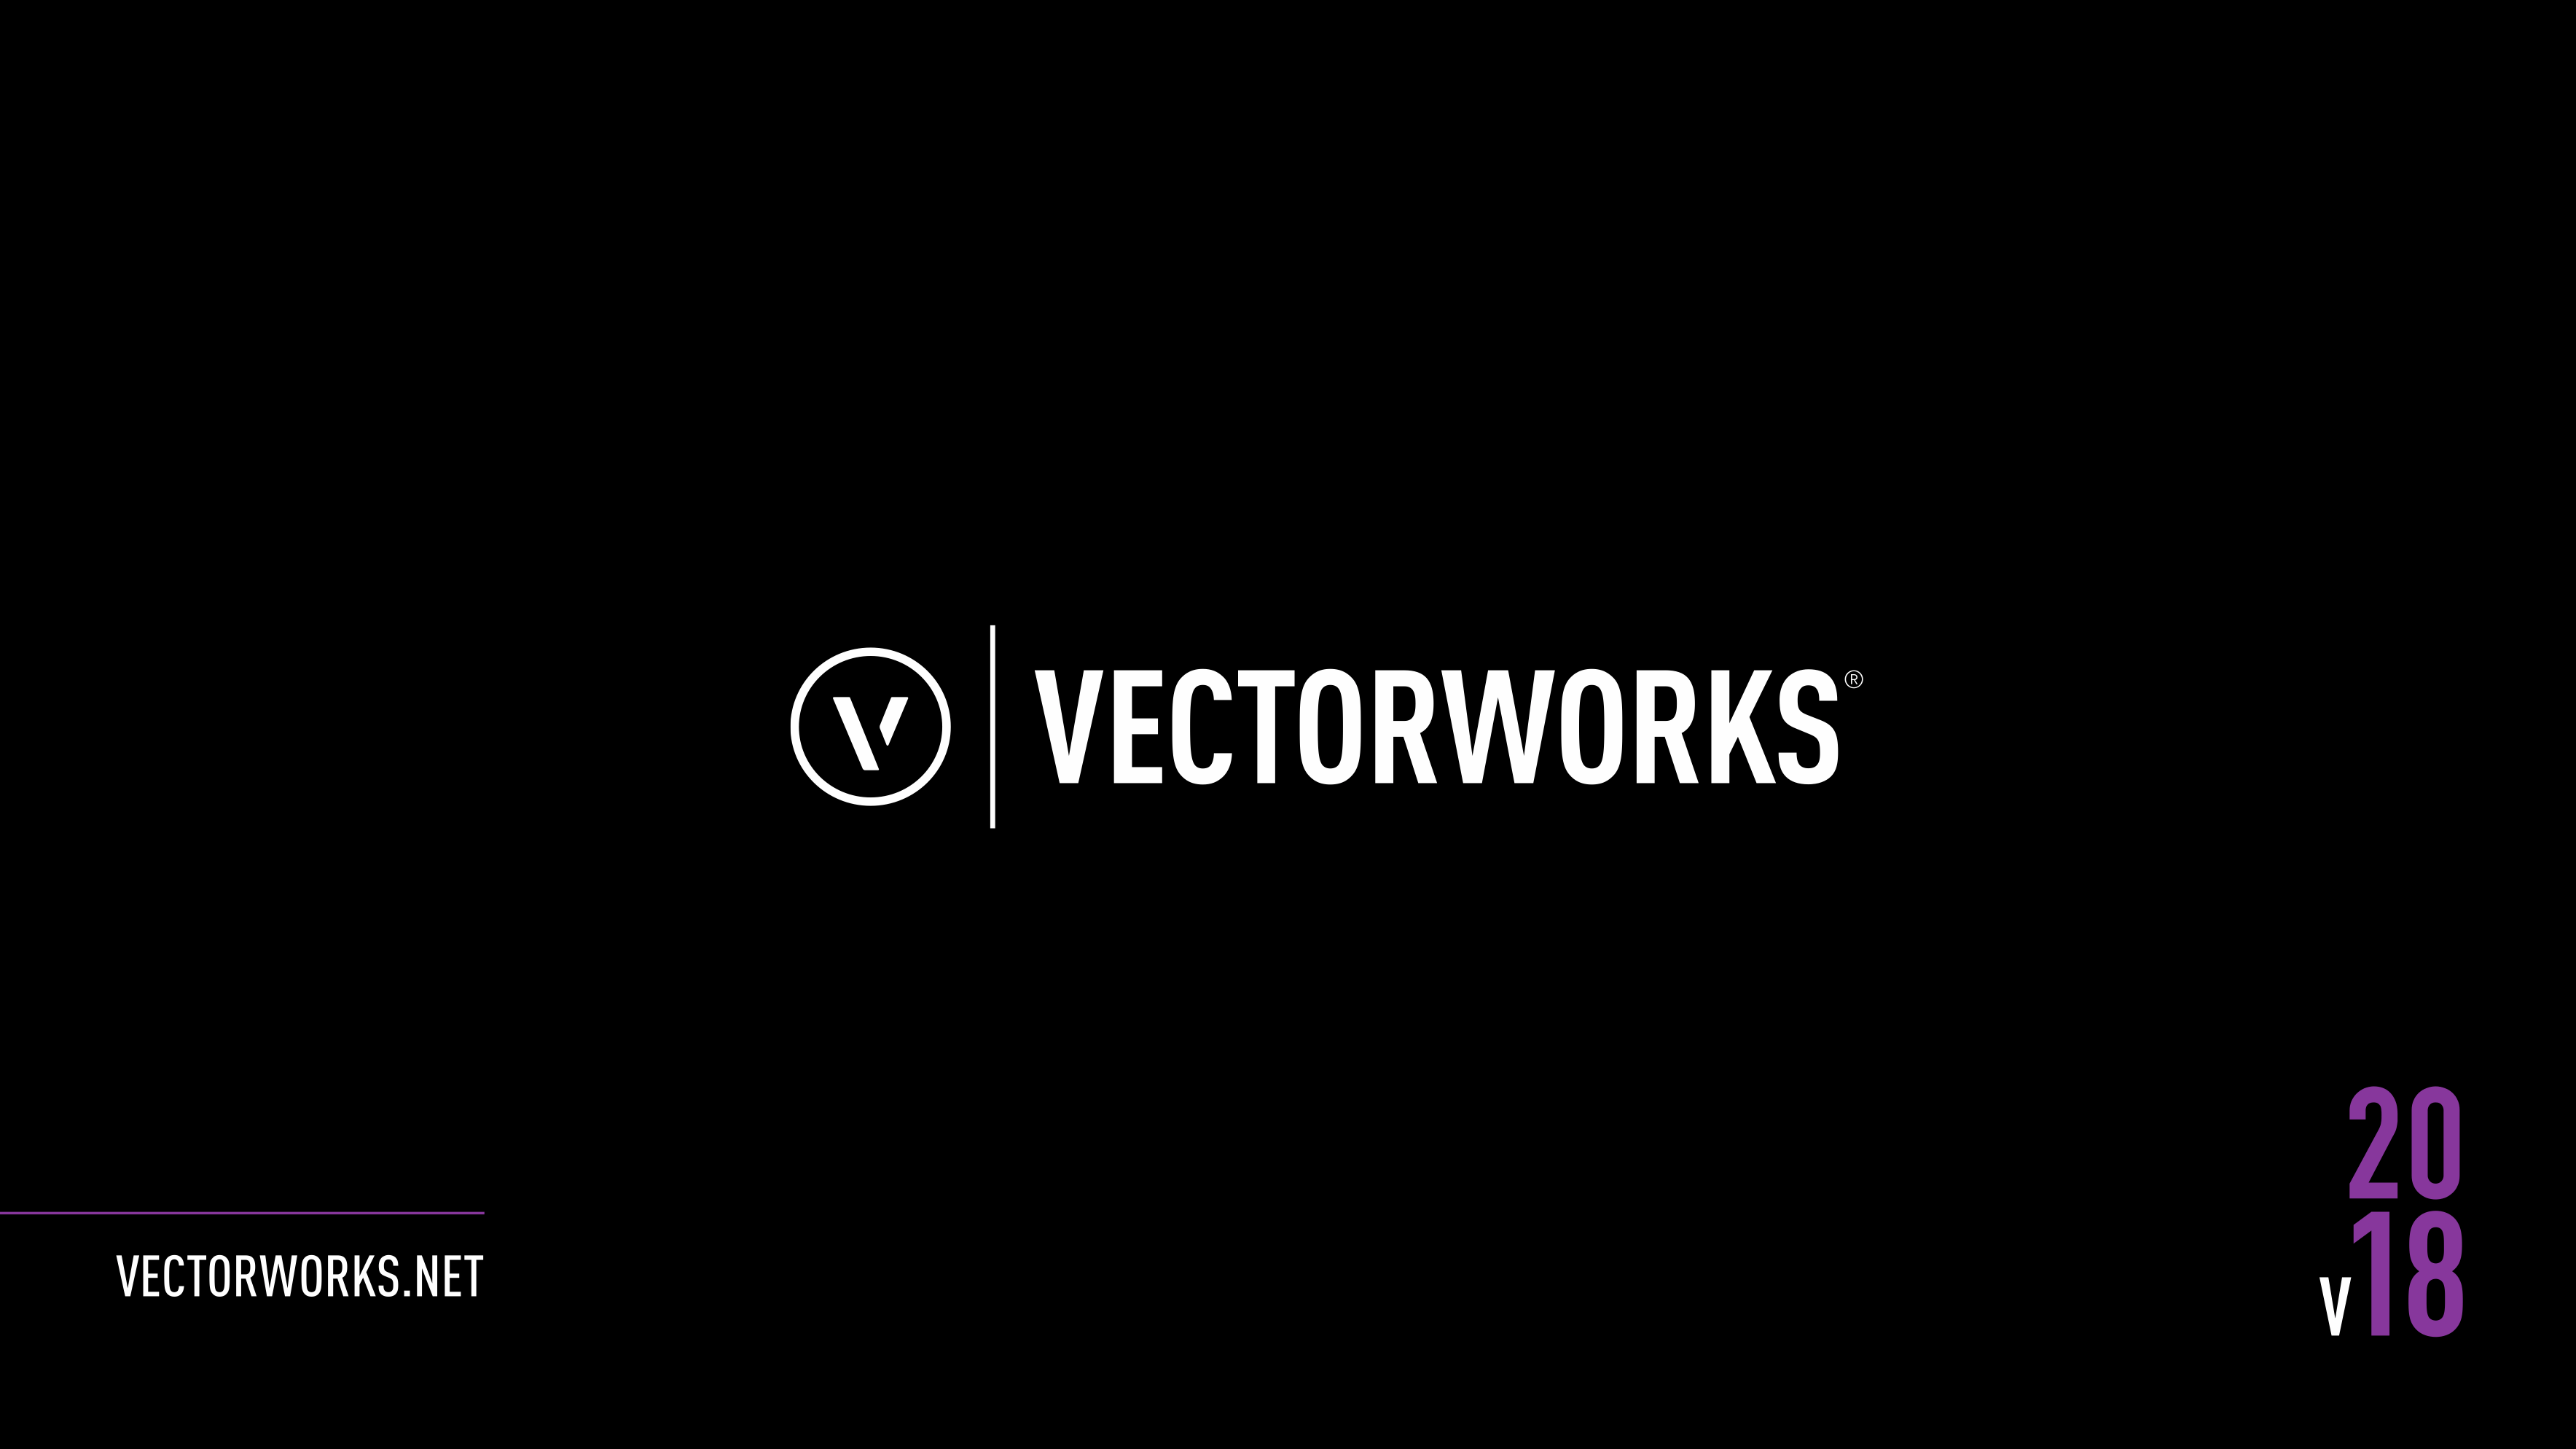 Vectorworks Logo - Vectorworks 2018 Getting Started Guides